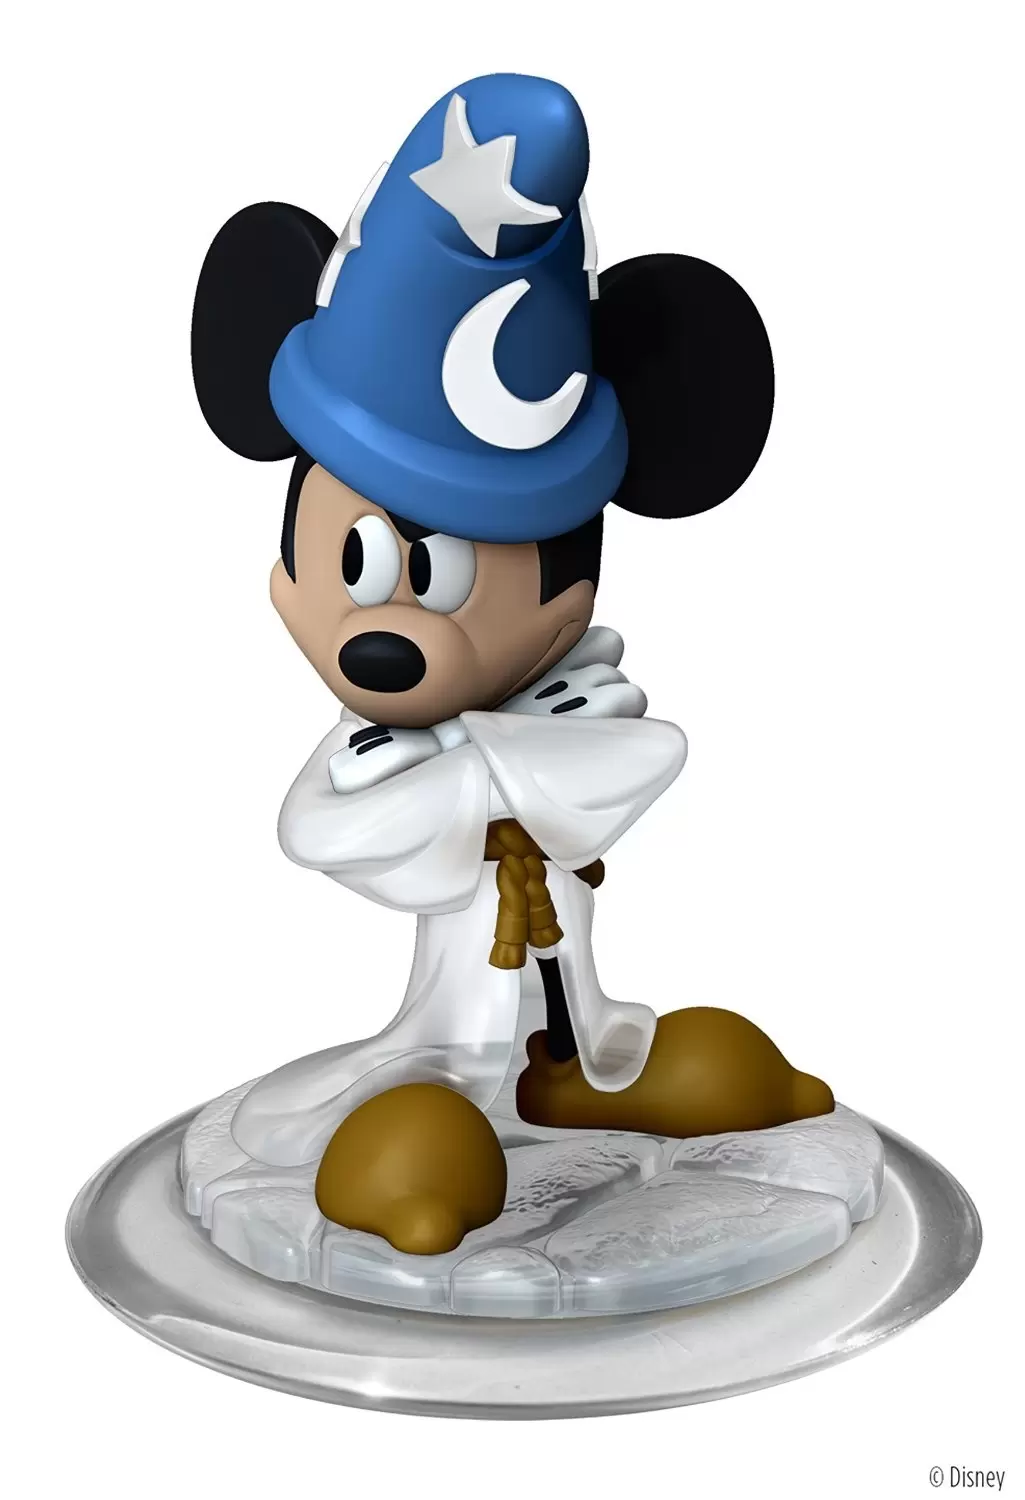 Disney Infinity Action figures - Crystal Sorcerer Mickey